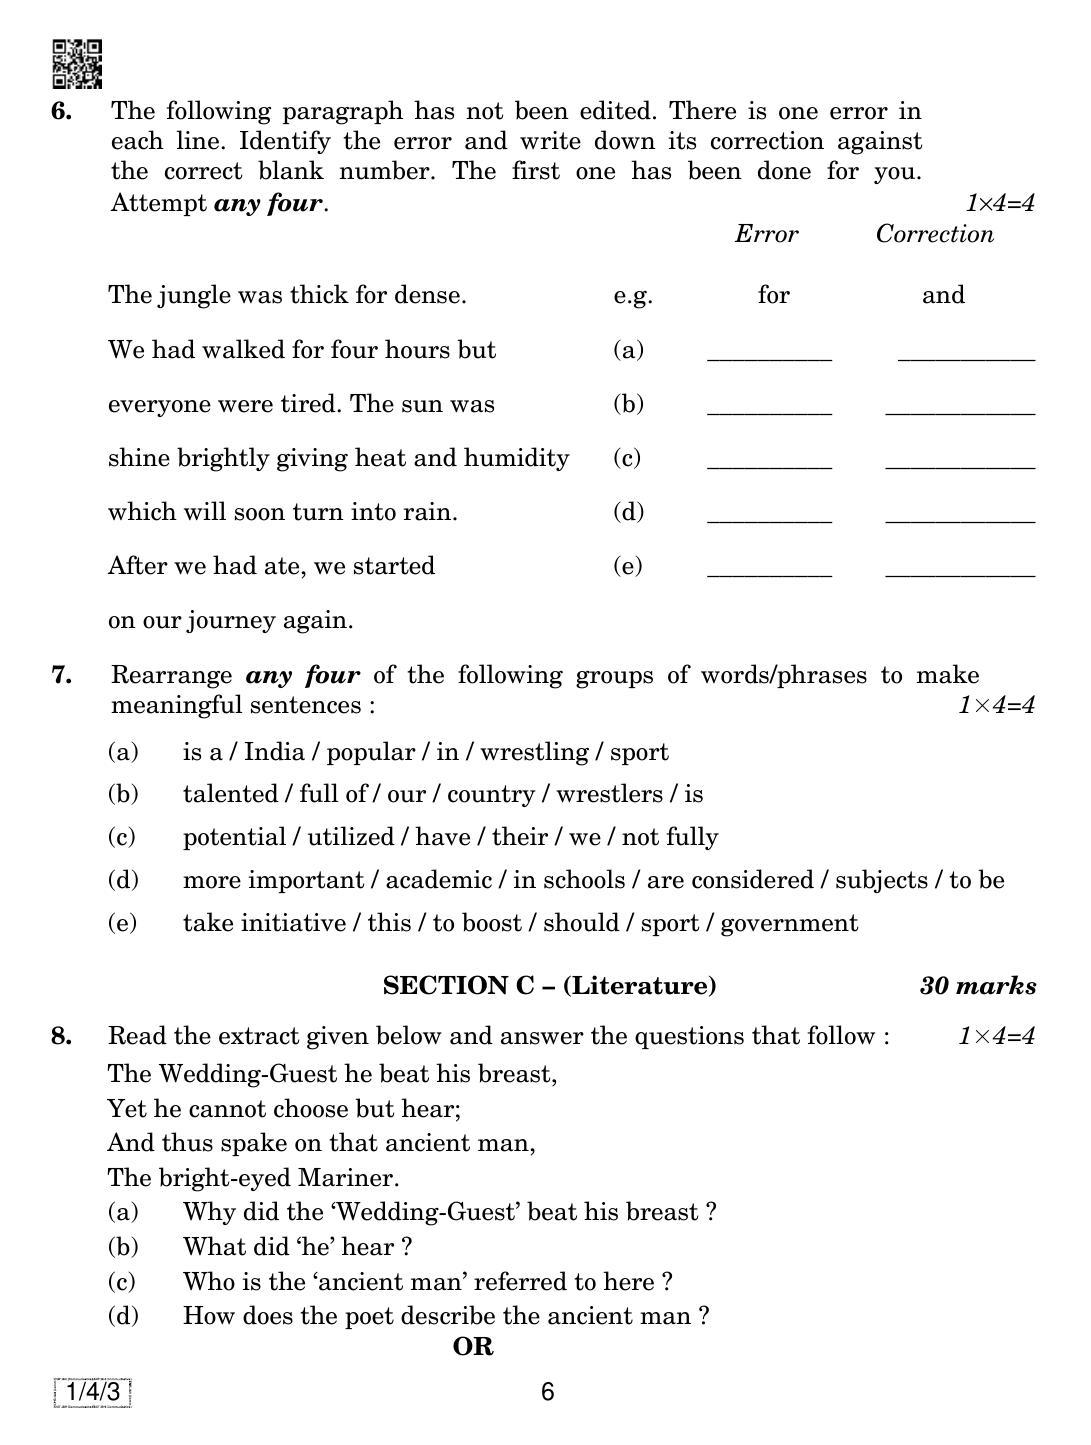 CBSE Class 10 1-4-3 ENGLISH COMMUNICATIVE 2019 Question Paper - Page 6